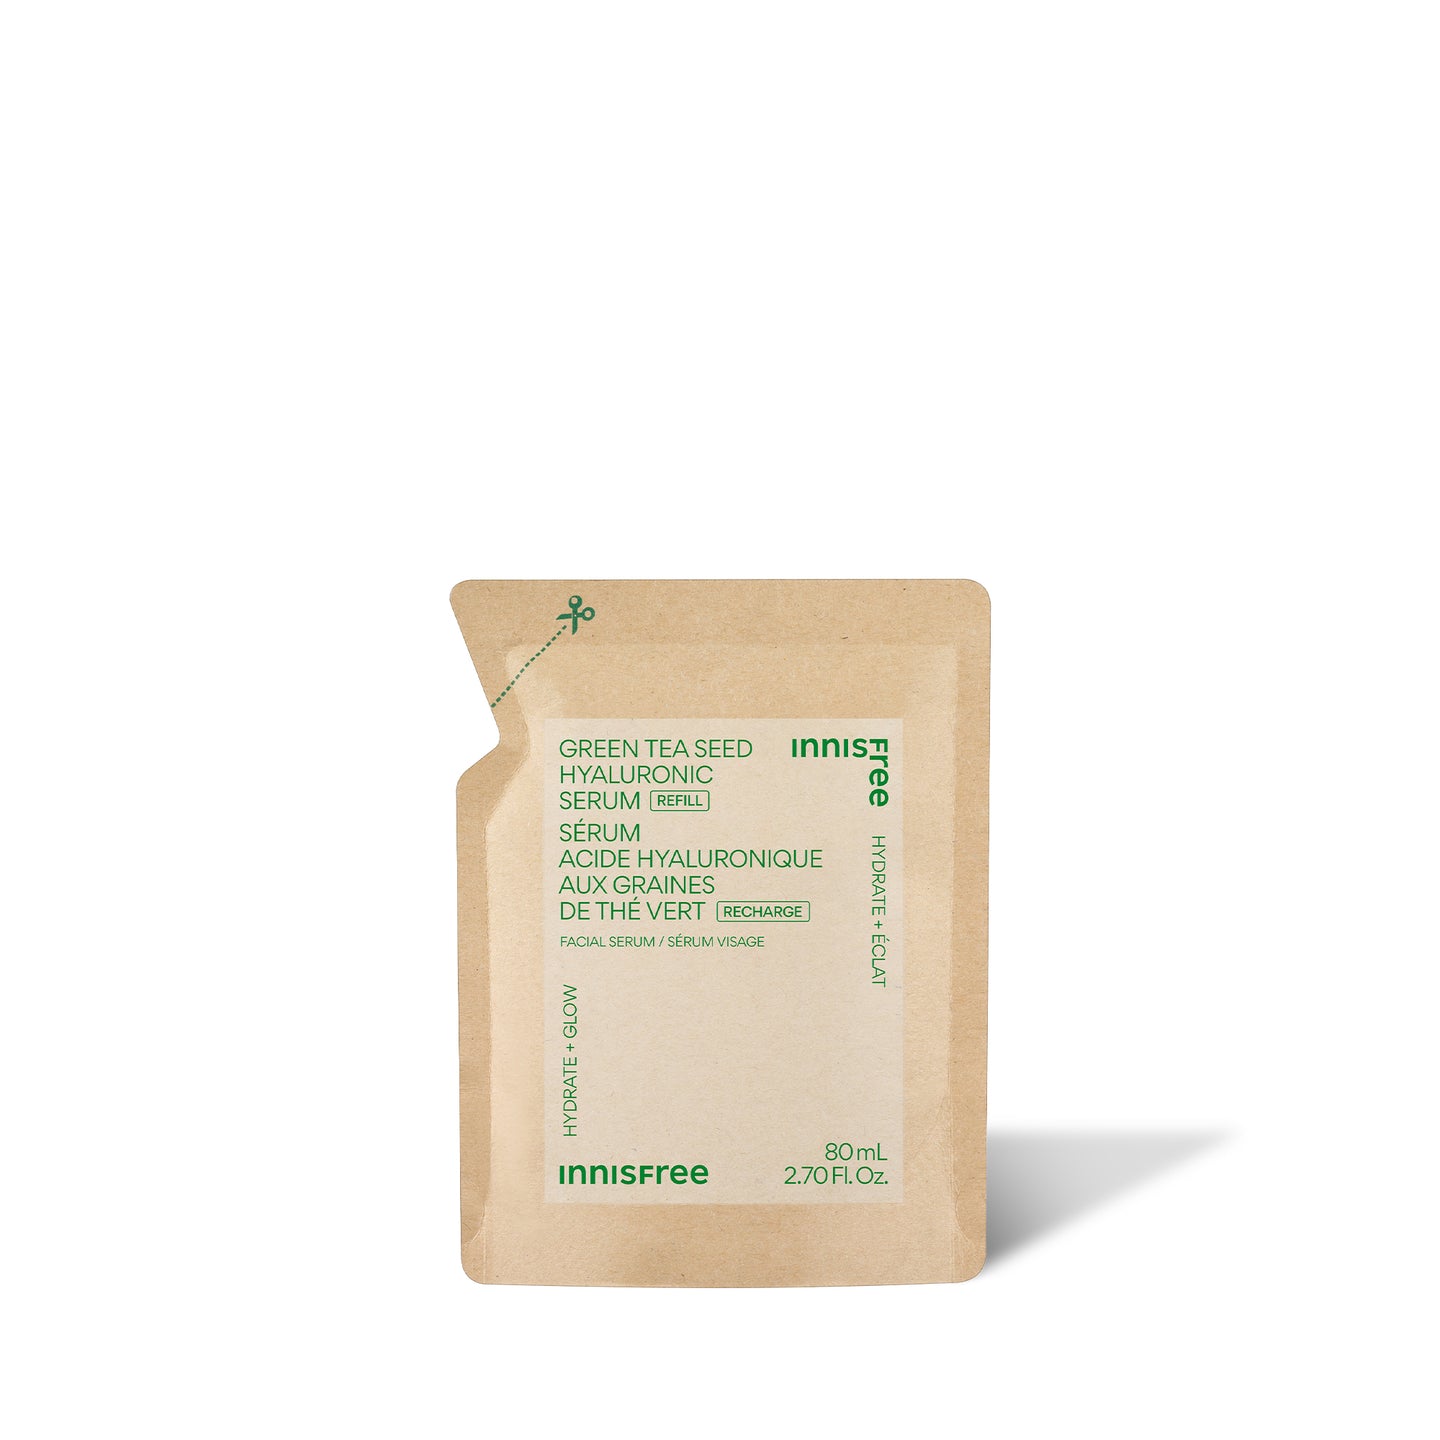 Green Tea Seed Hyaluronic Serum Refill